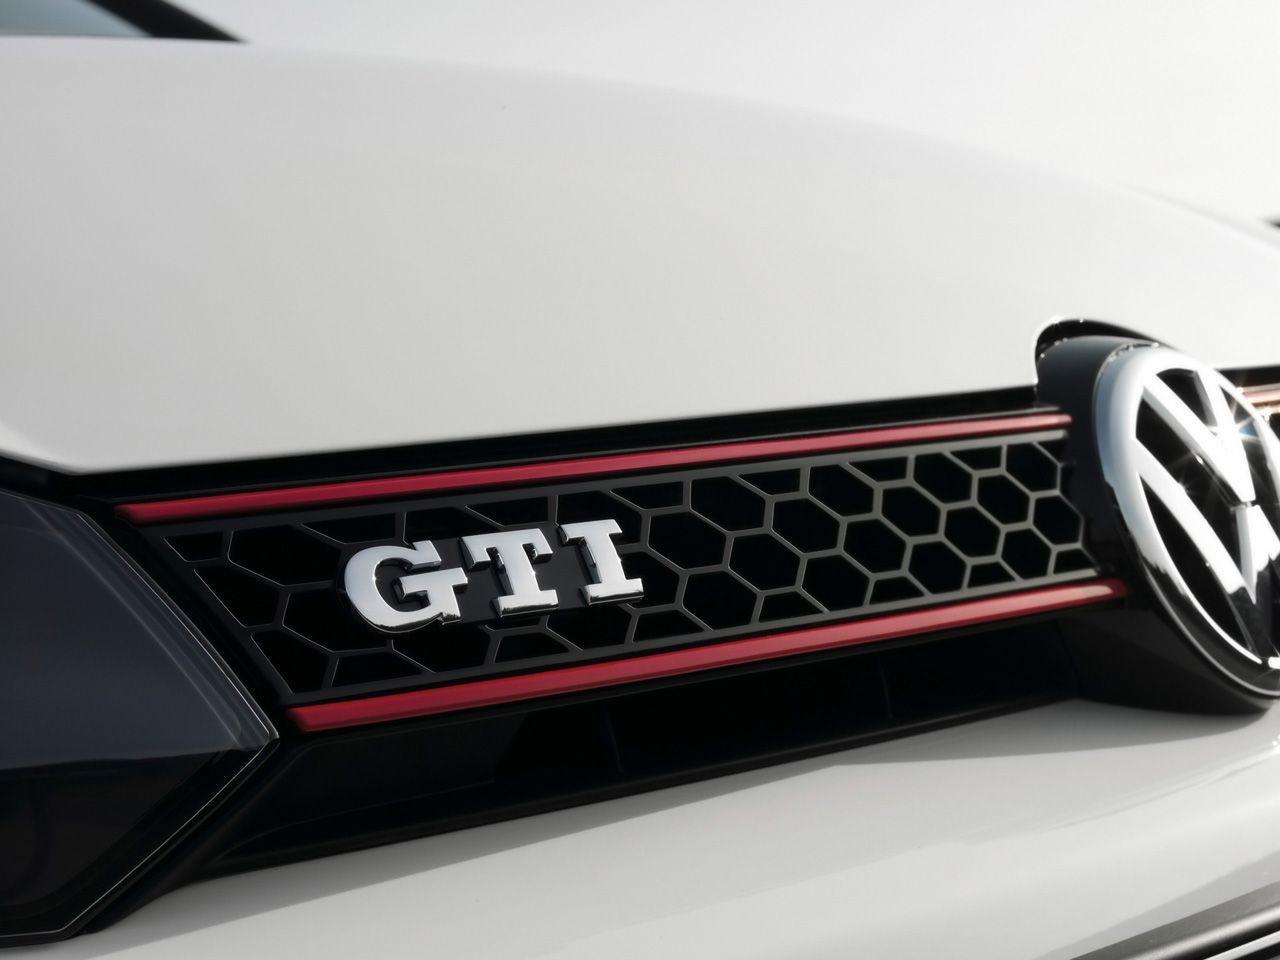 VW Golf GTI: Wallpaper for your desktop pleasure